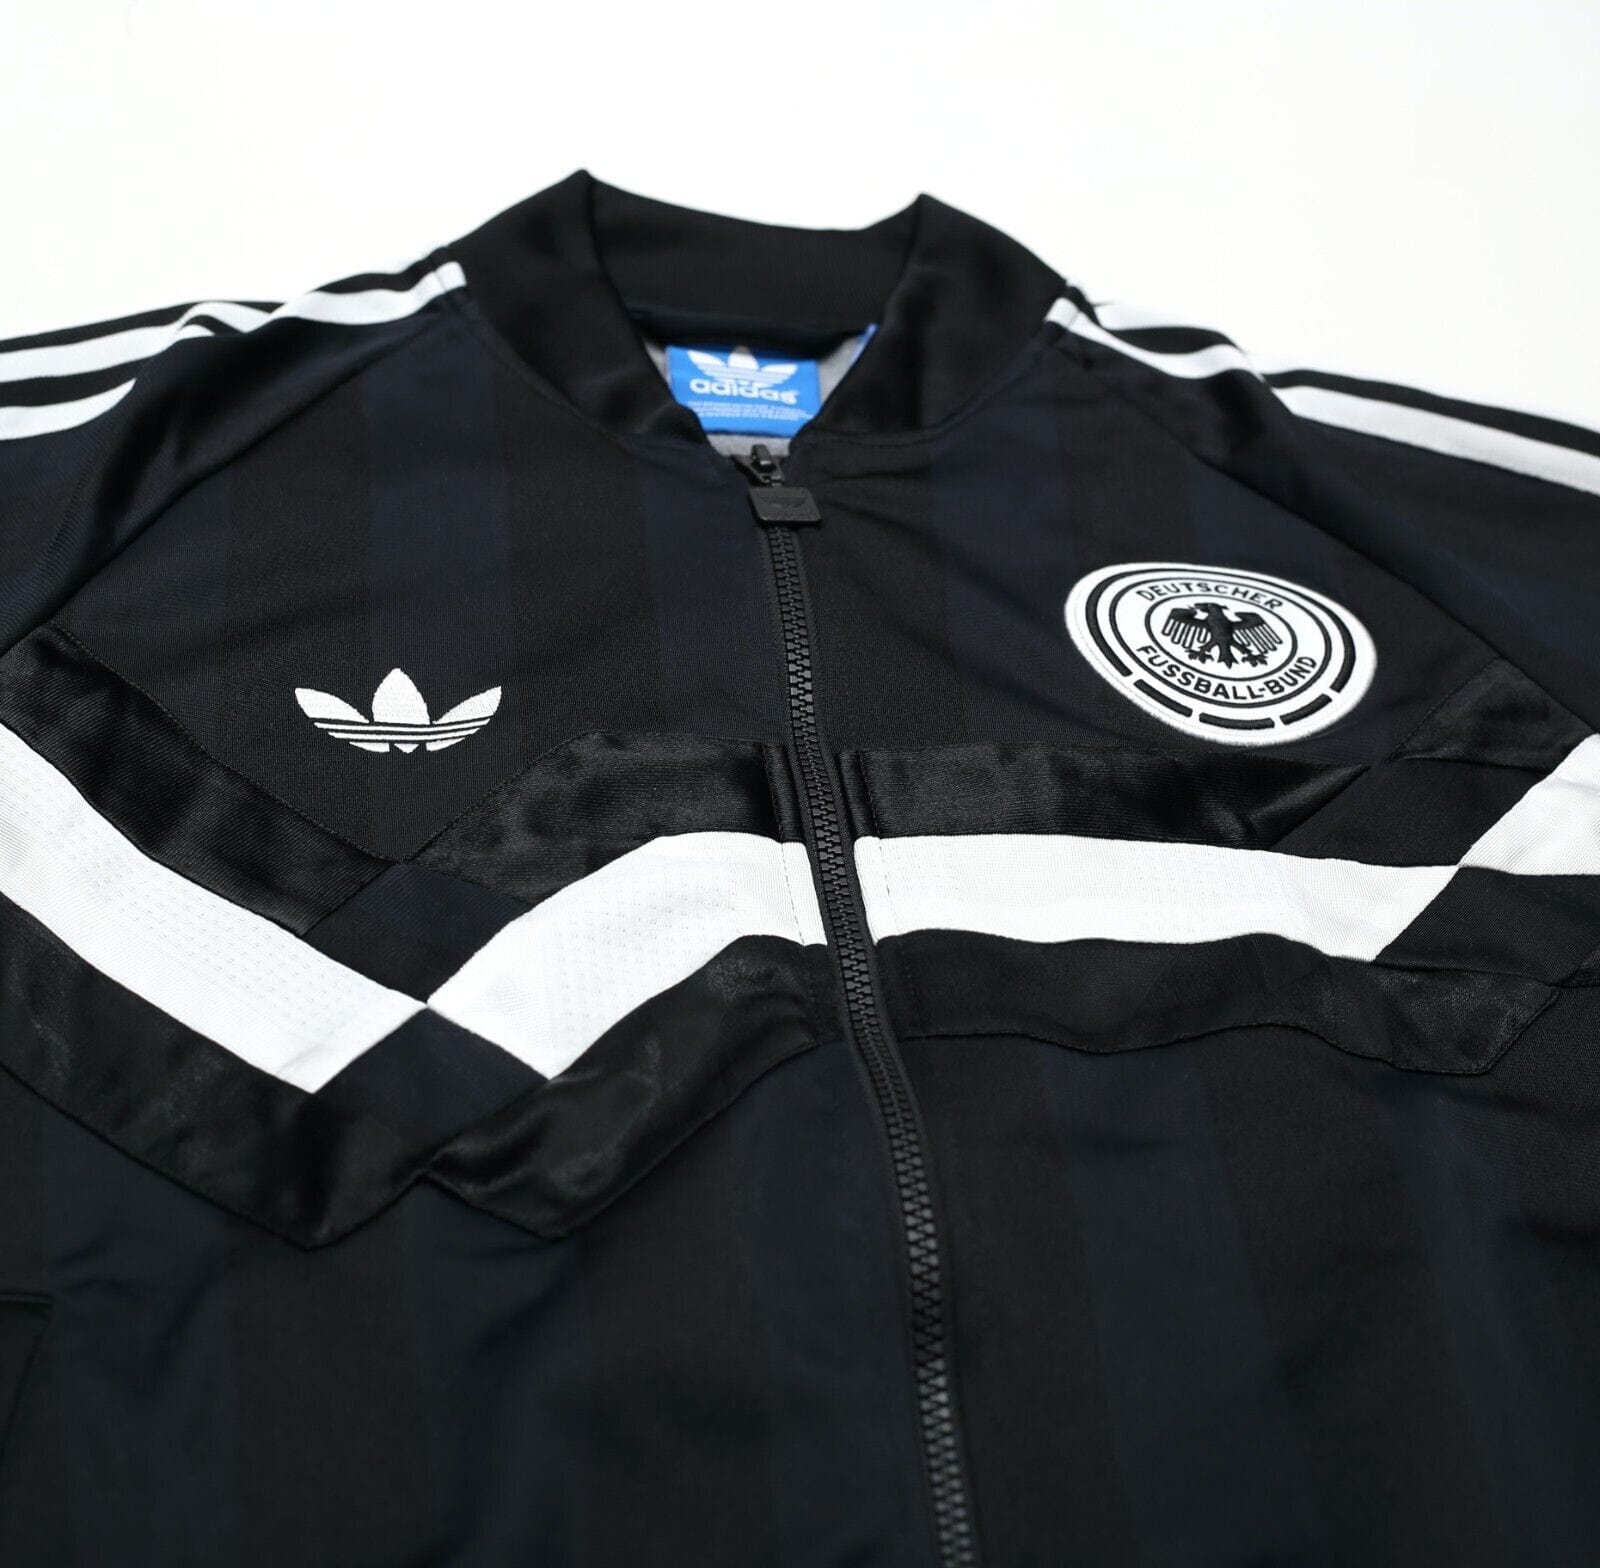 1988/91 GERMANY Italia 90 Retro adidas Originals Football Track Top Jacket (M)